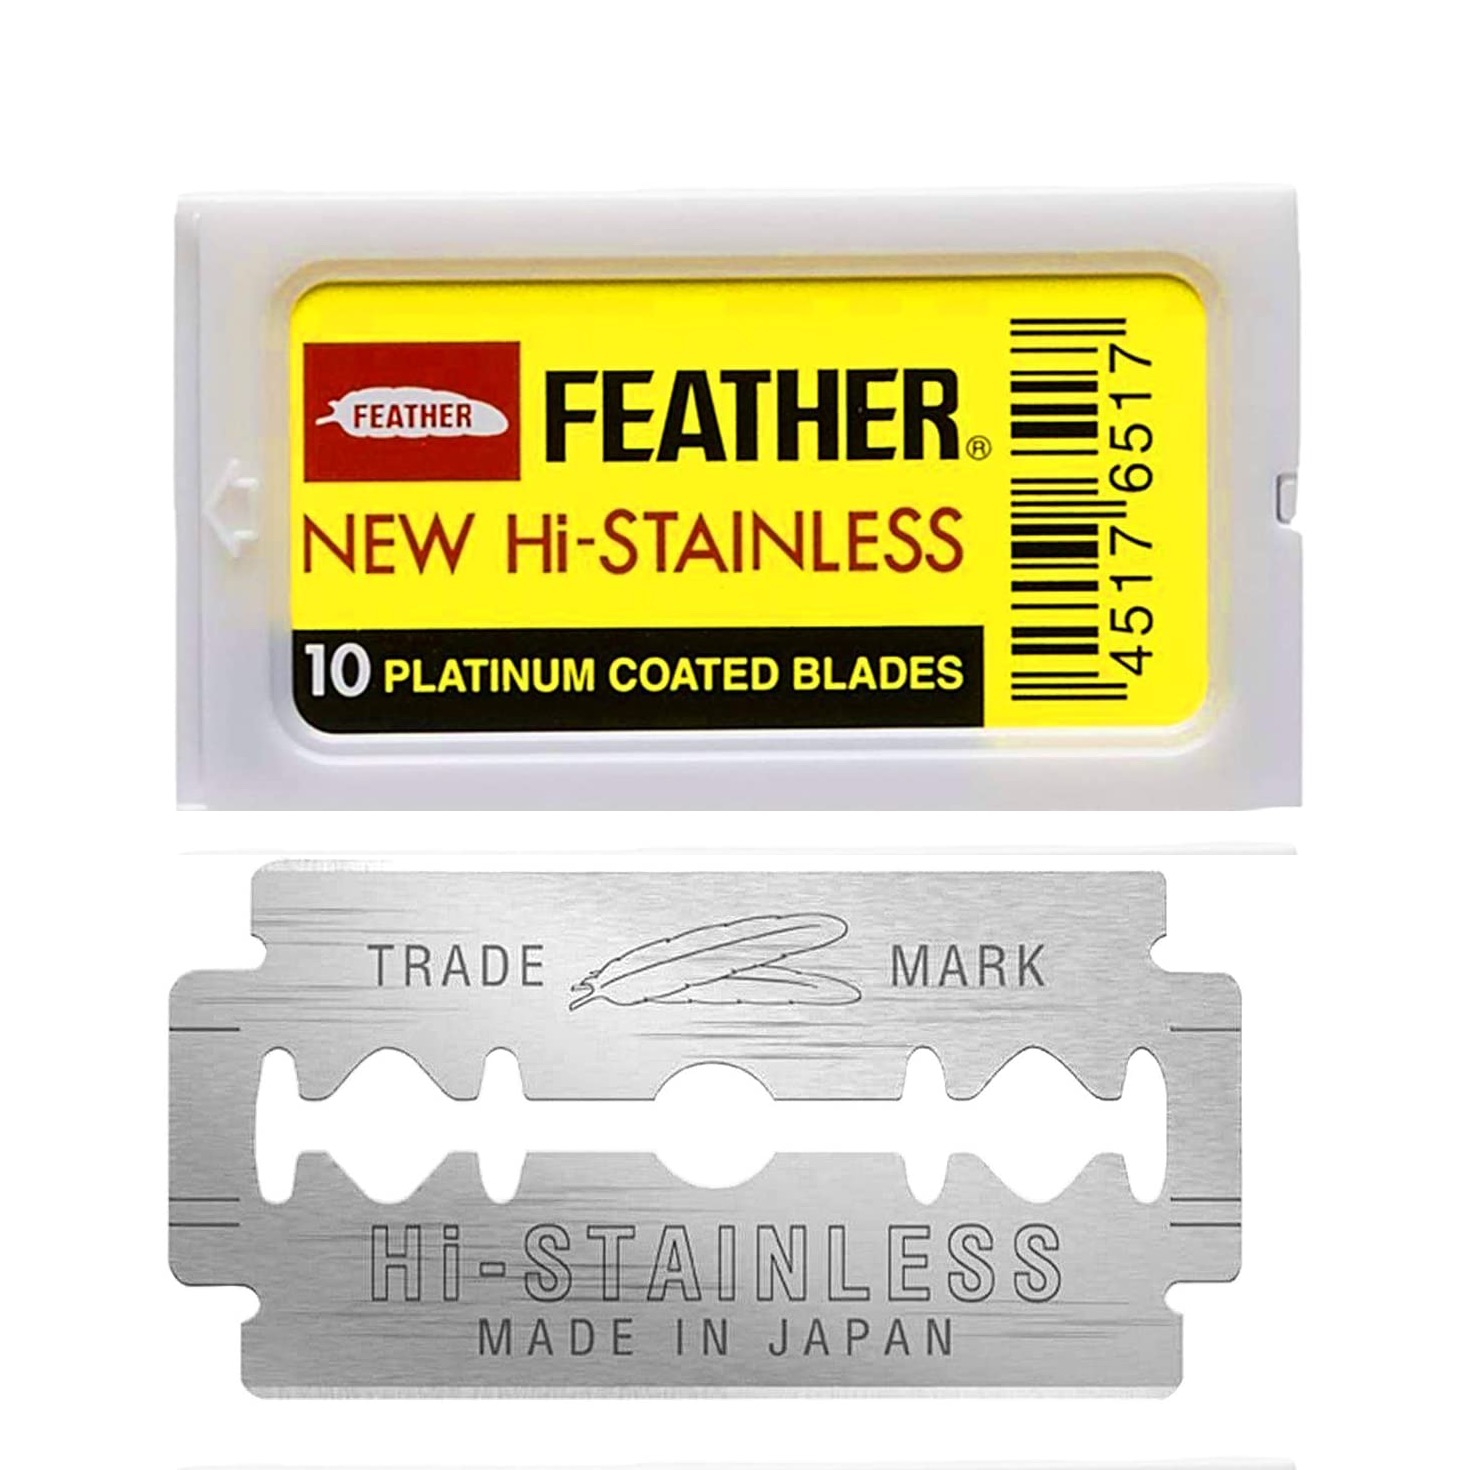 Feather Hi-Stainless Double Edge Blades 20x- 1.2 - 0 - BOX-DEB-FEATHER-YELLOW